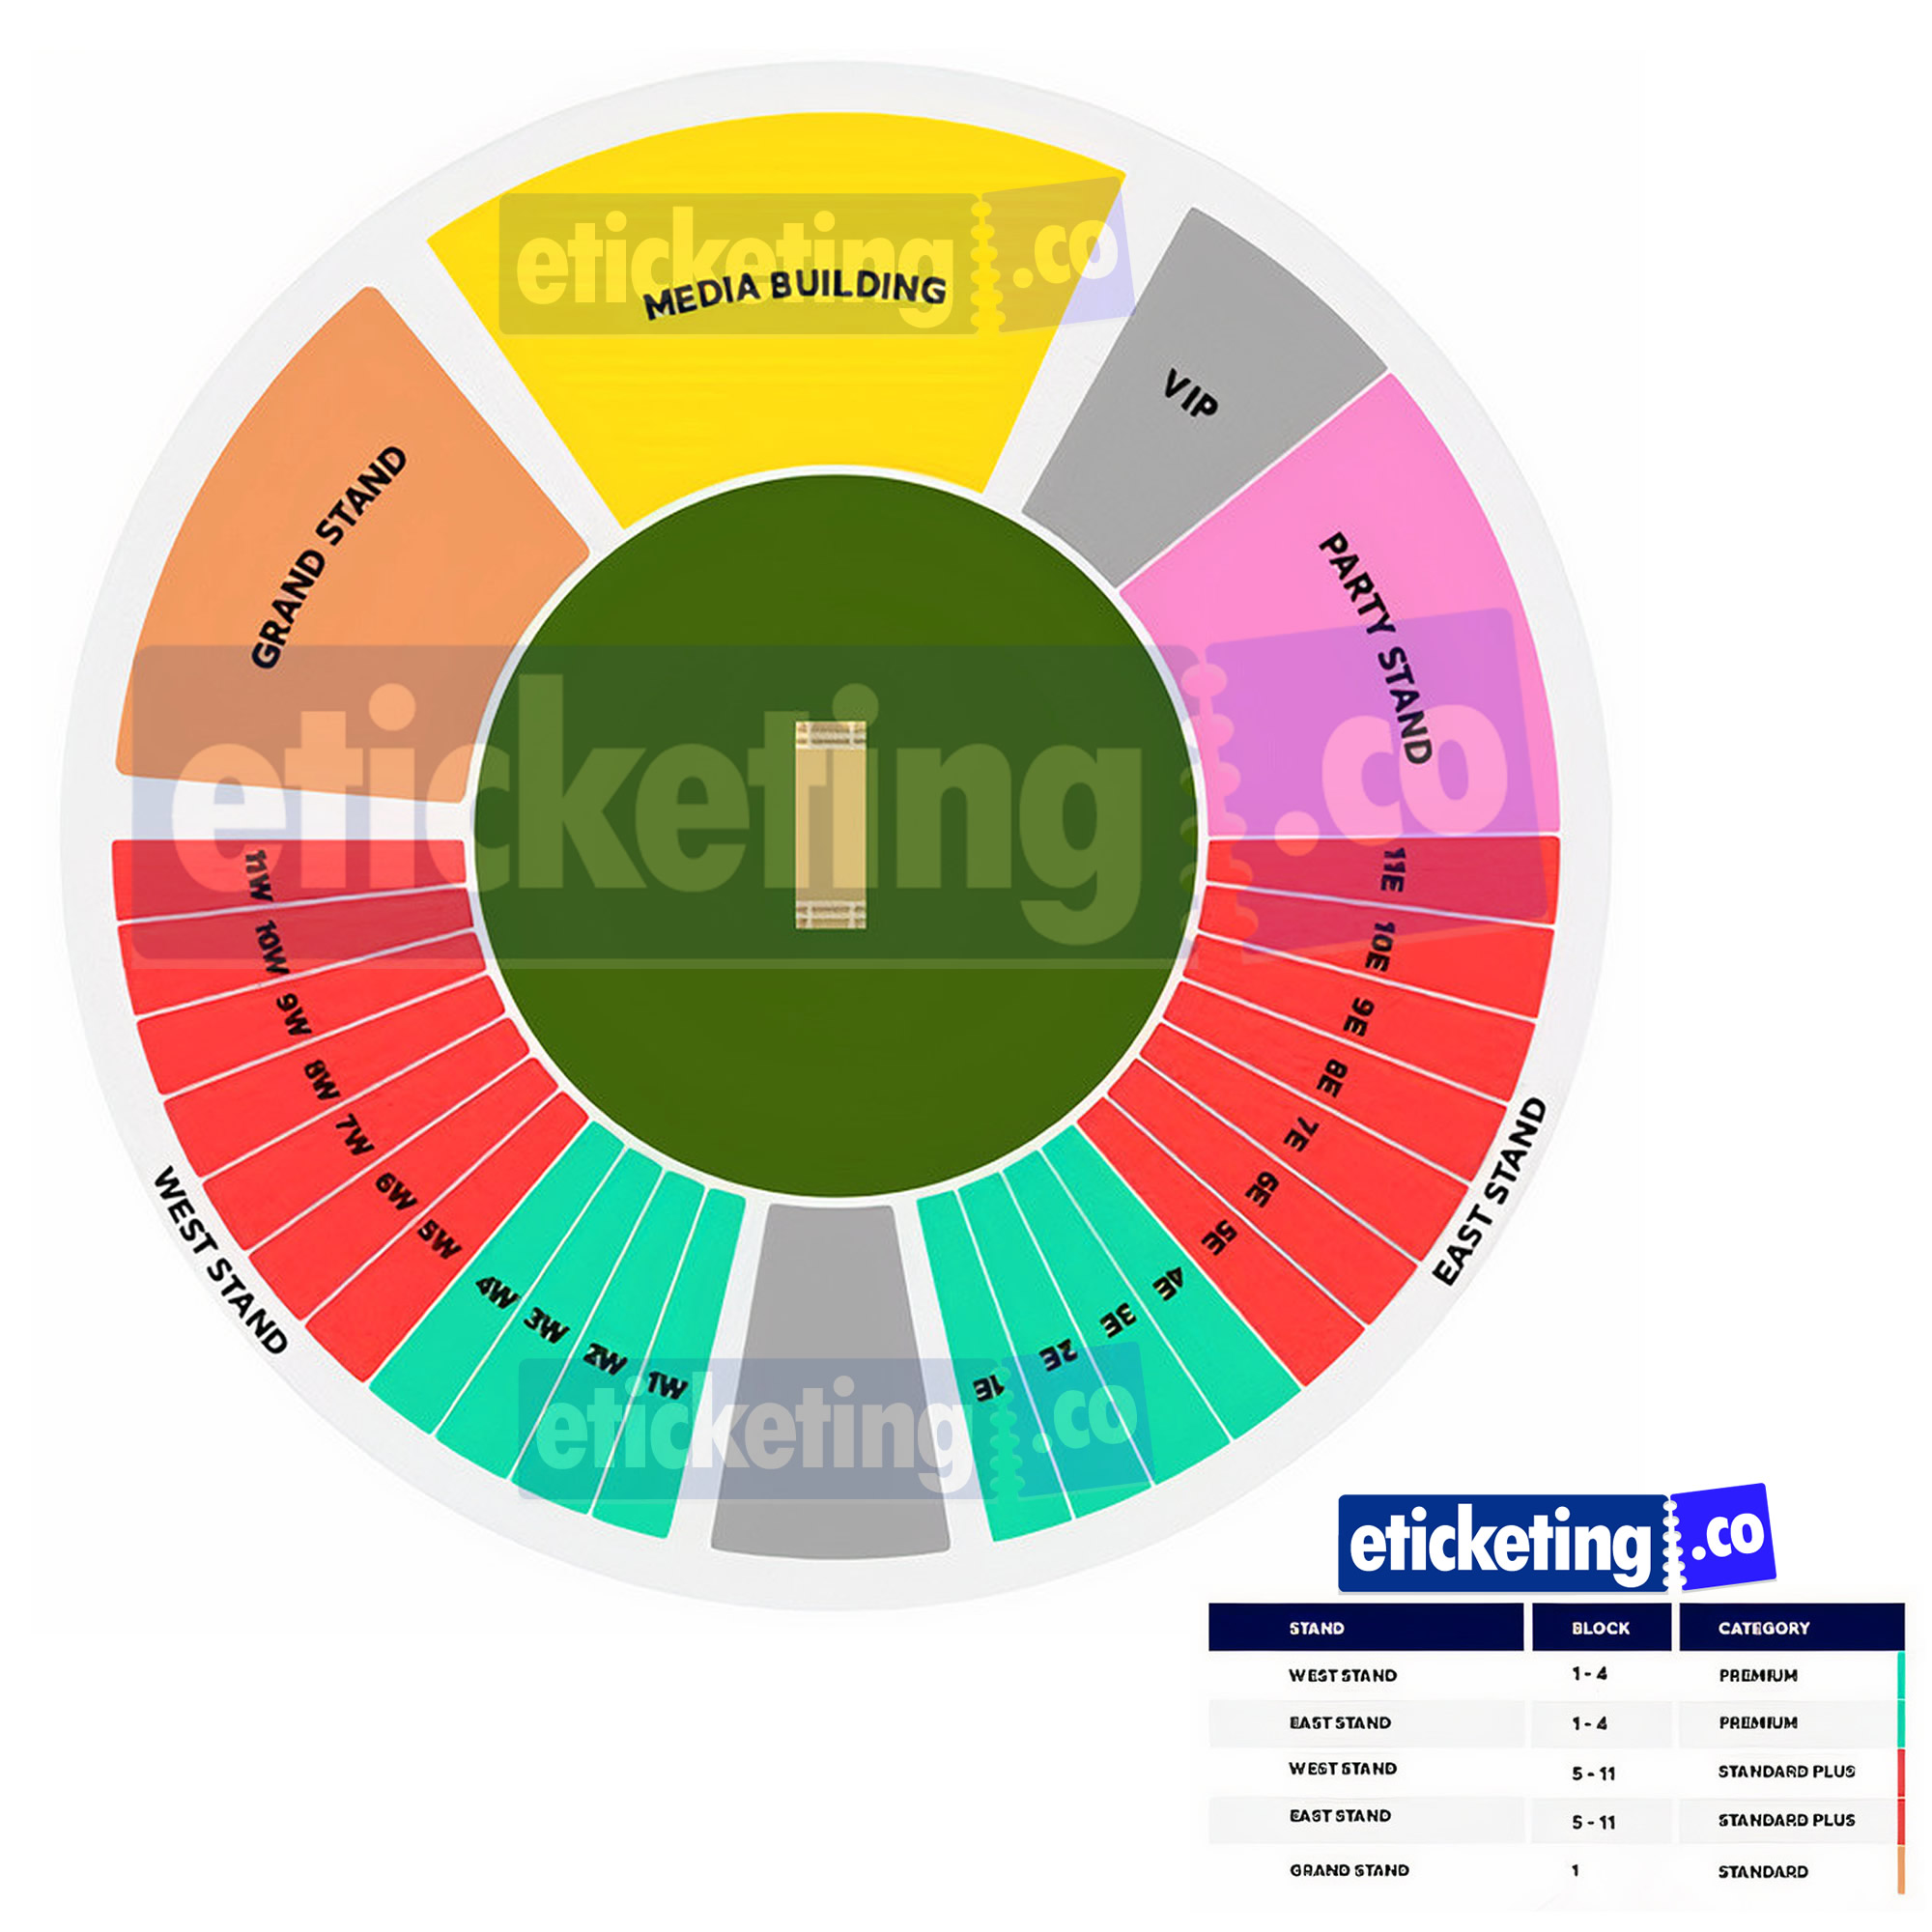 Central Broward Regional Park & Stadium Pakistan vs Ireland Venue Seating Plan